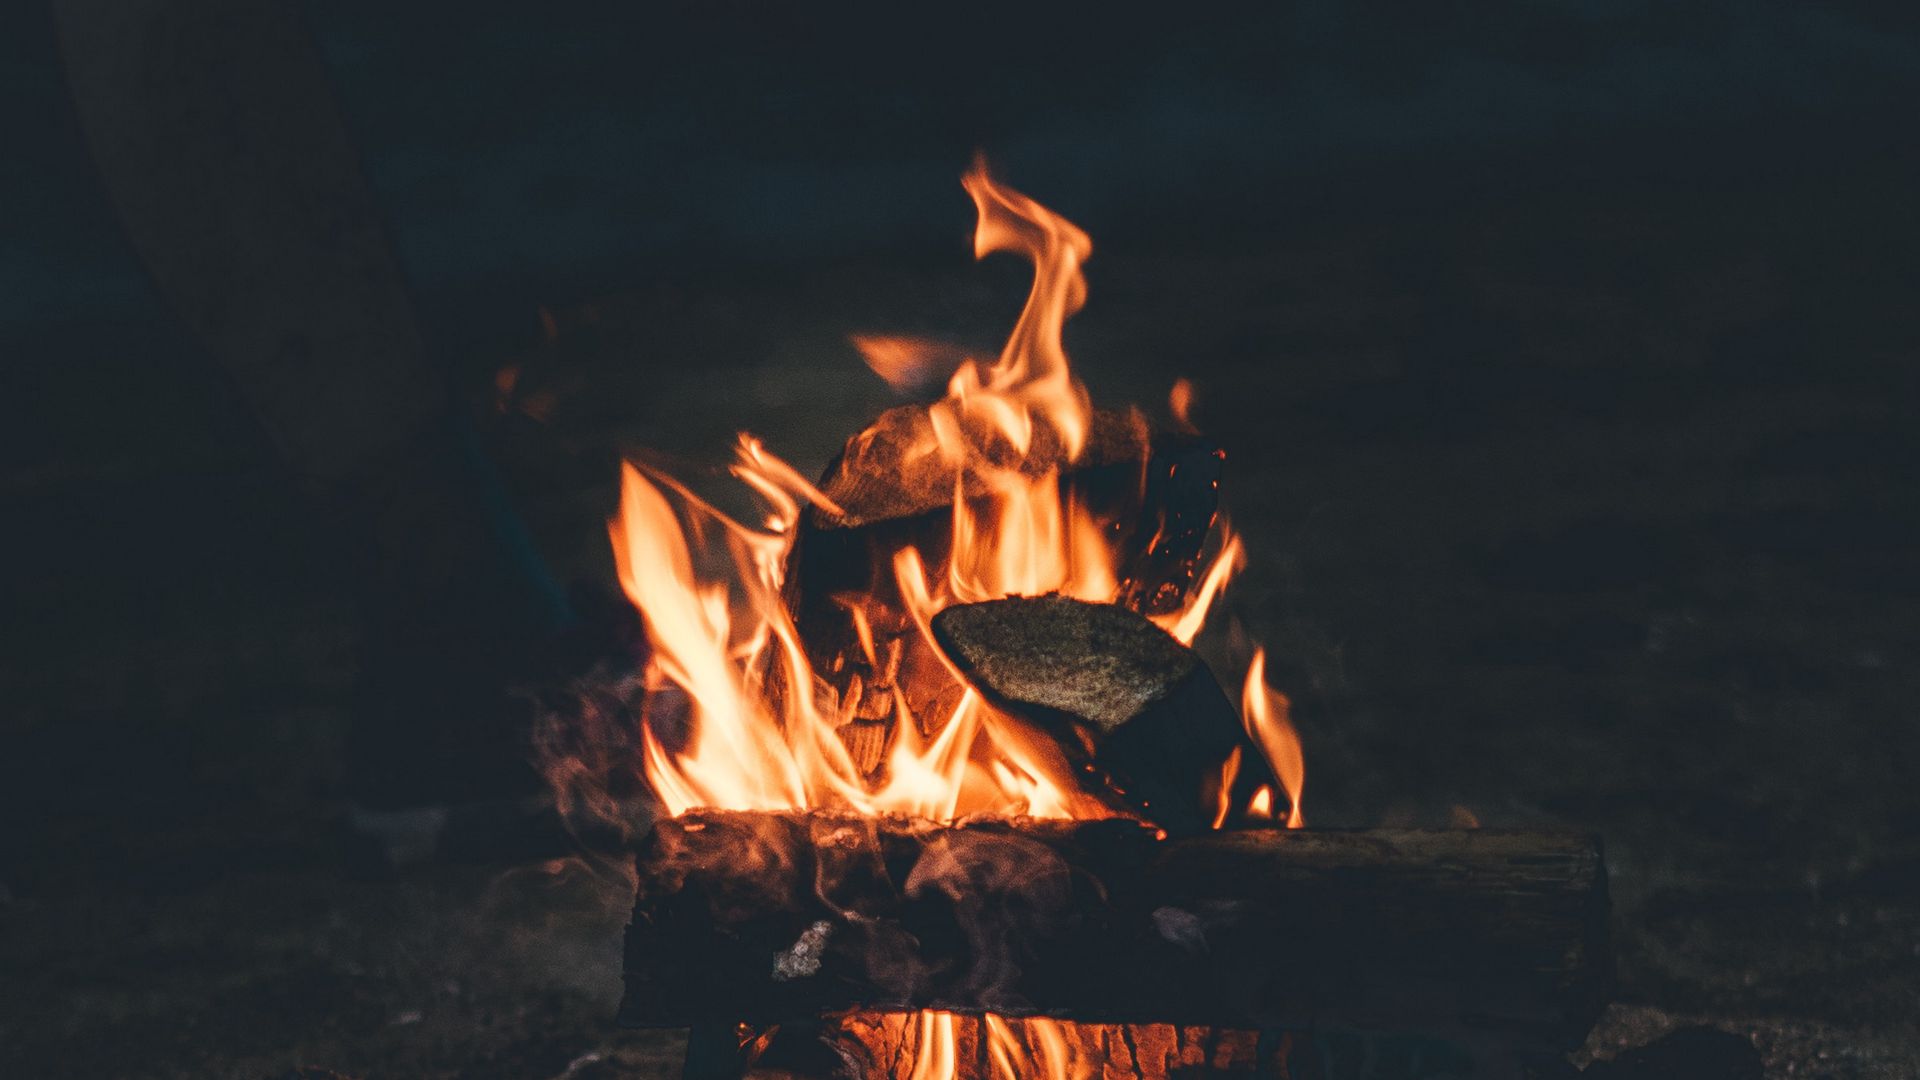 Download Wallpaper 1920x1080 Bonfire Fire Camping Firewood Night